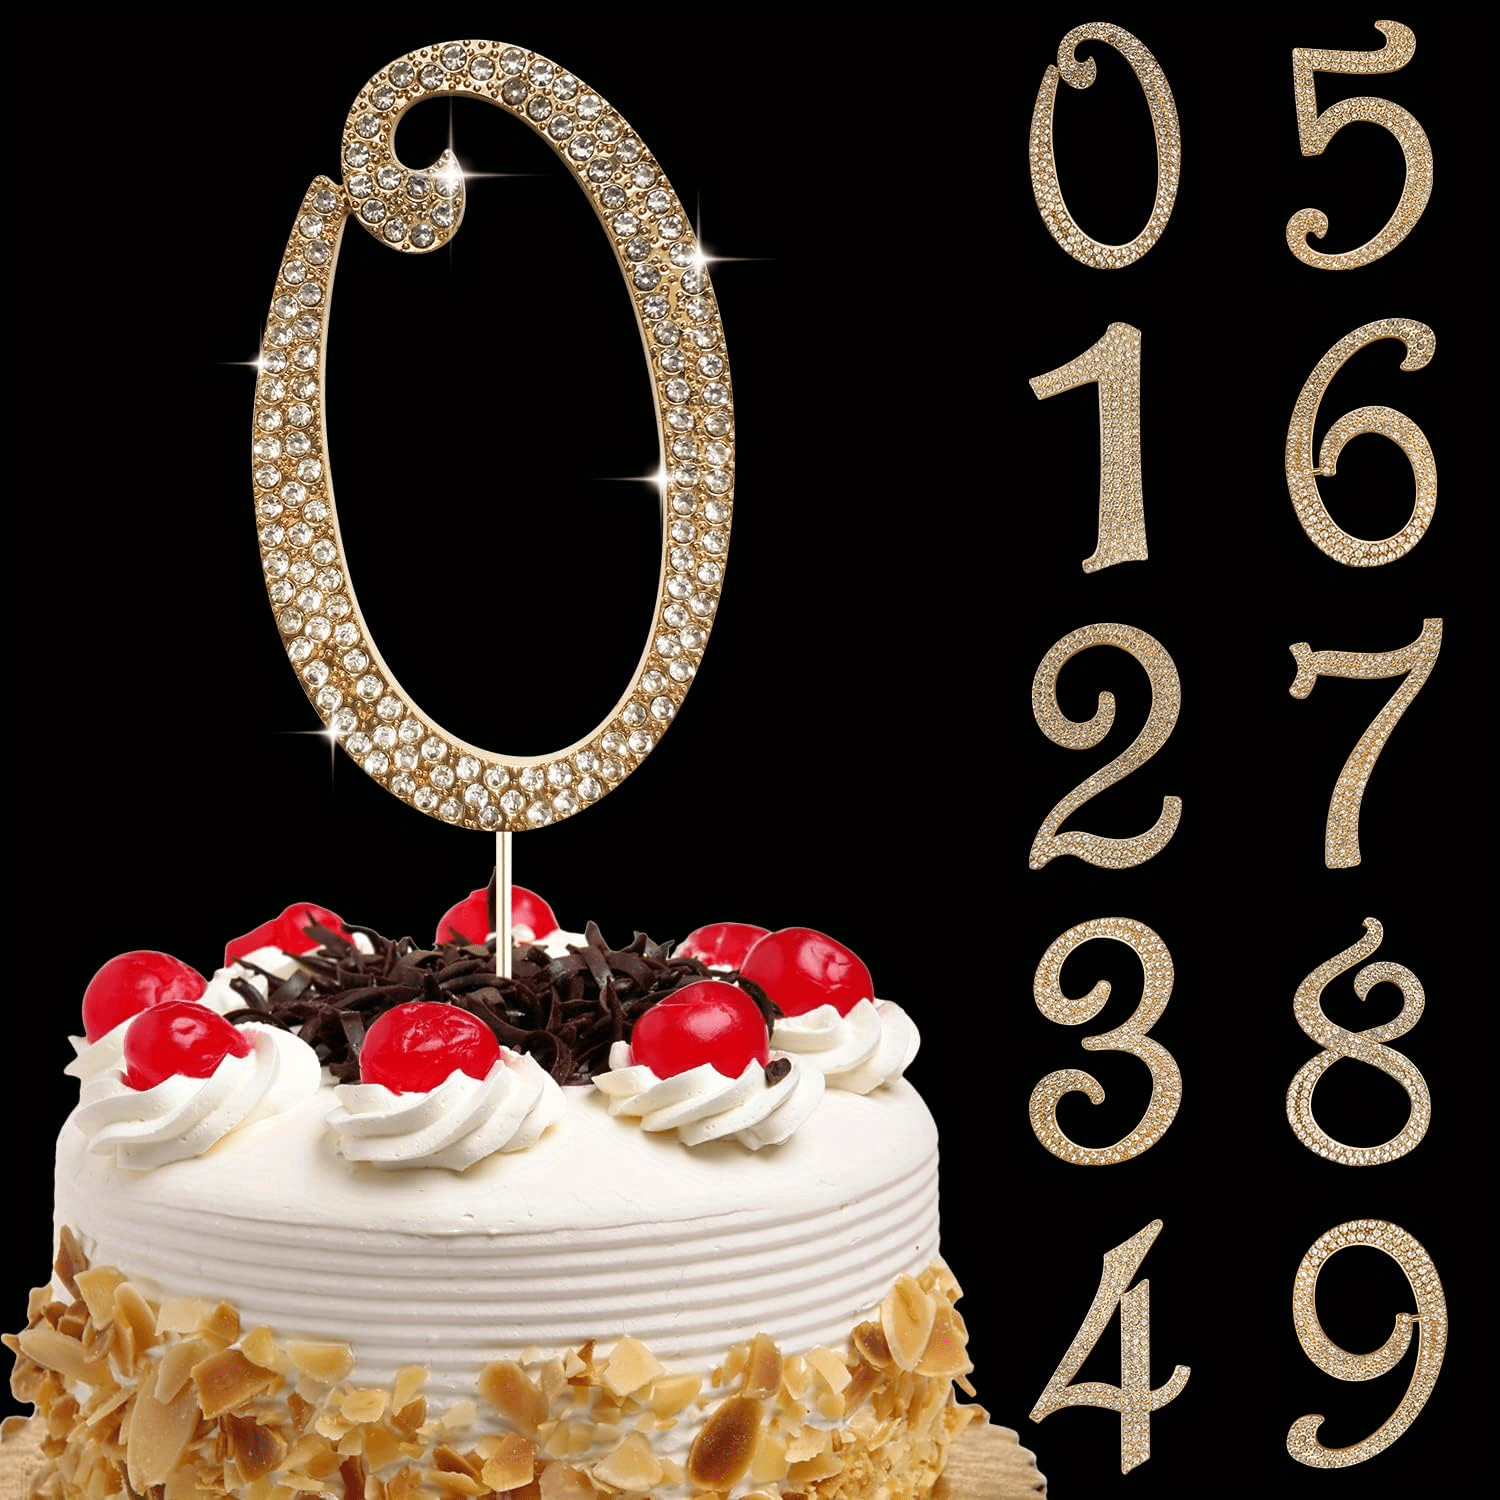 70 Cake Topper - Gold Crystal Rhinestone Metal Number Decoration